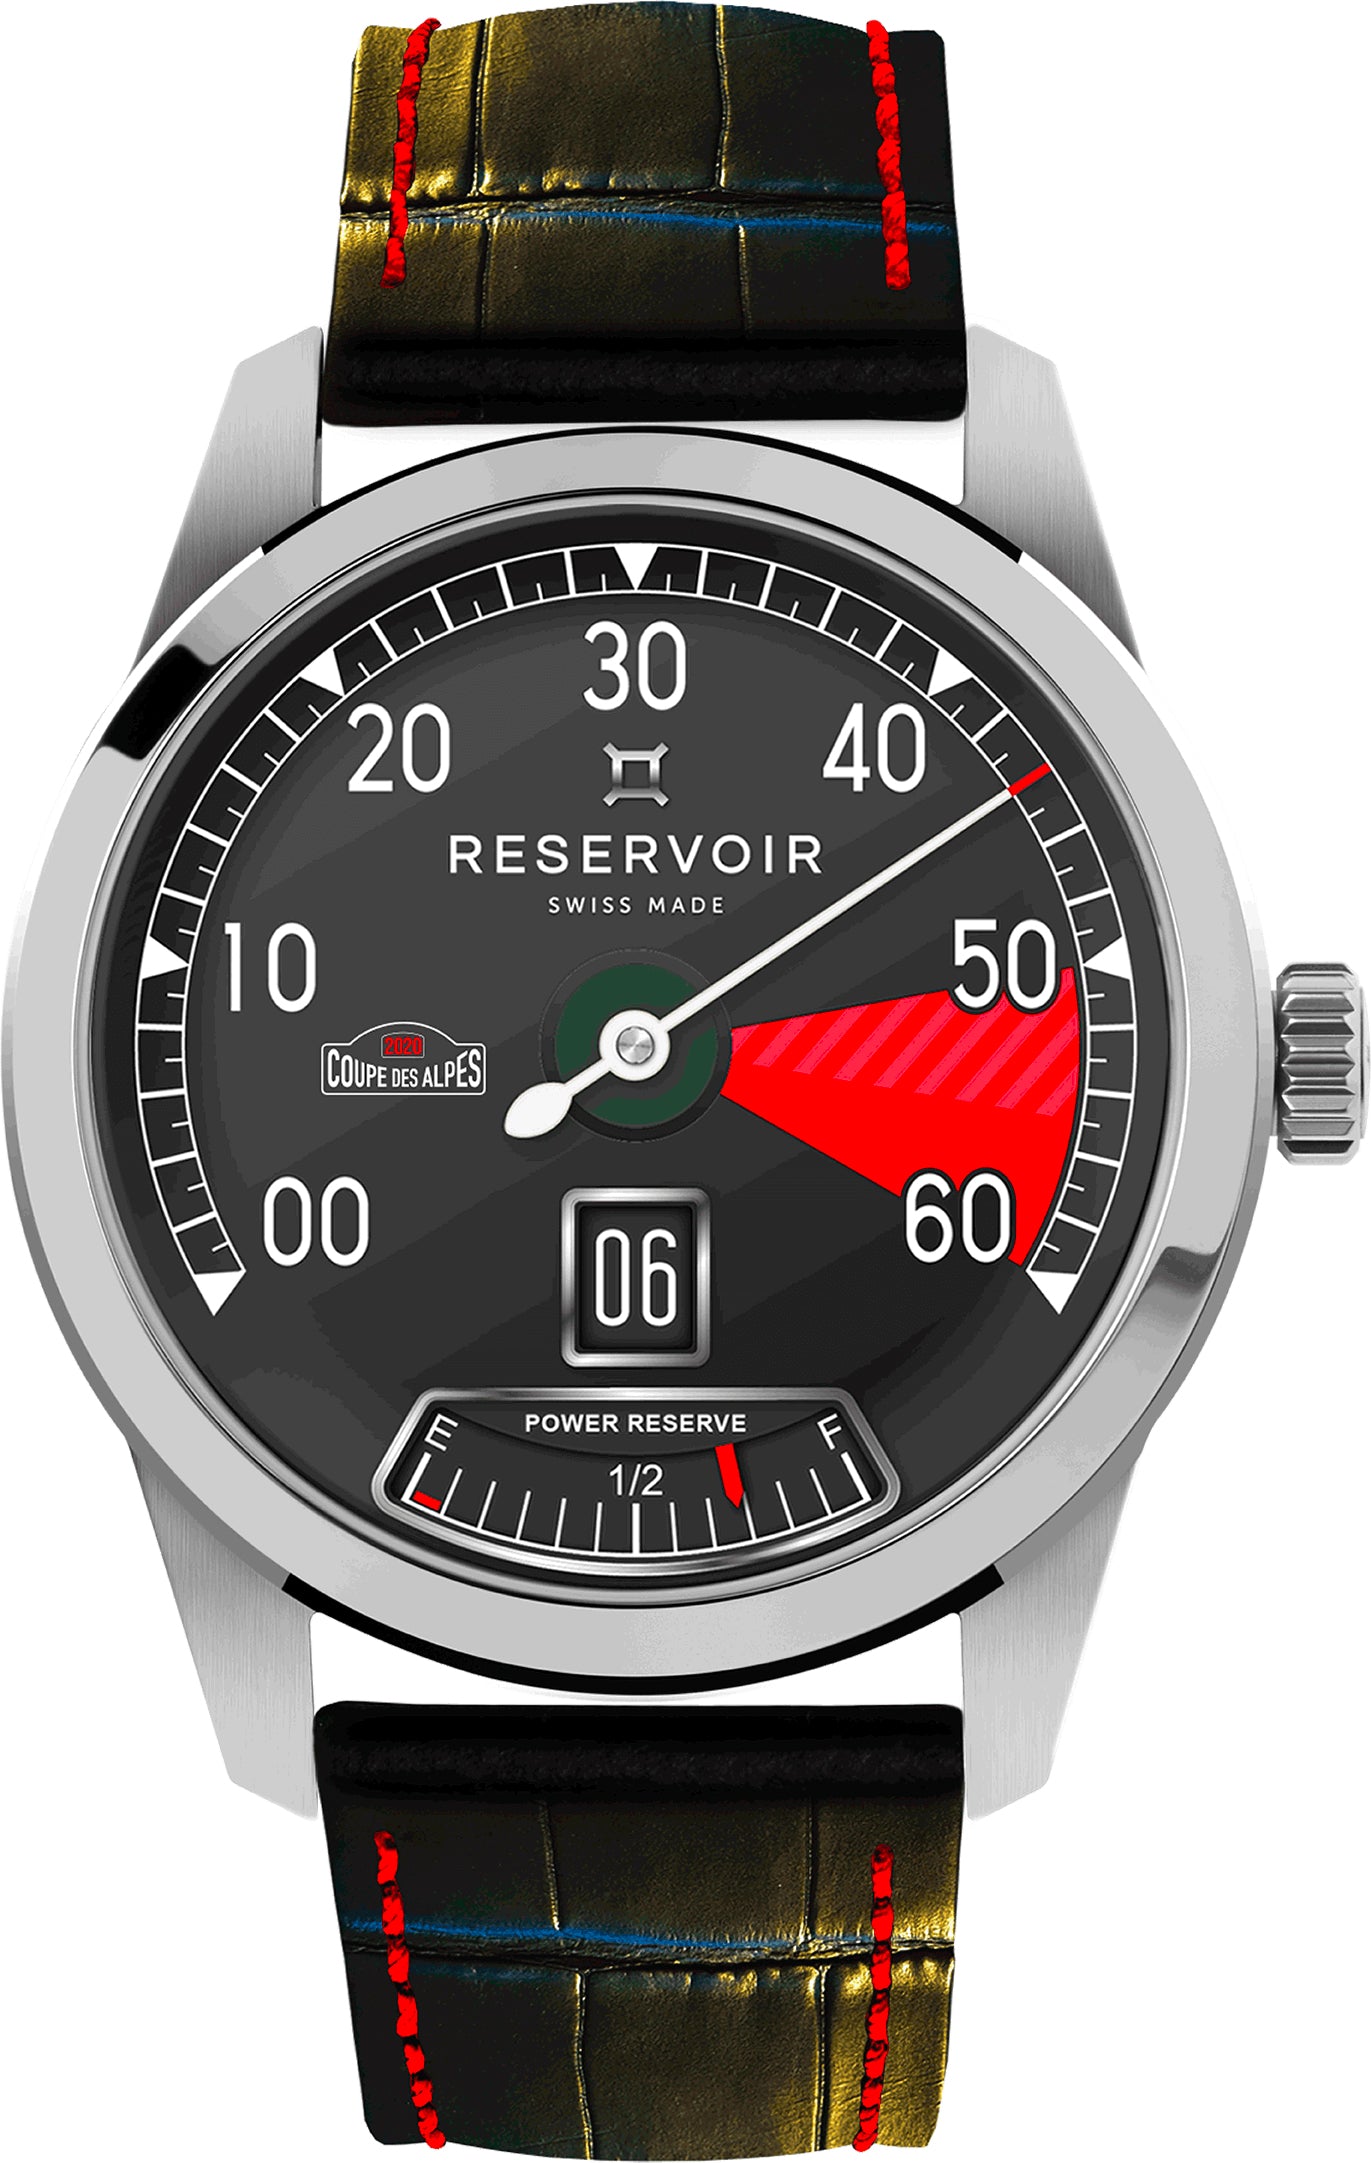 Photos - Wrist Watch Reservoir Watch Supercharged Coupe des Alpes Limited Edition - Black RSV-0